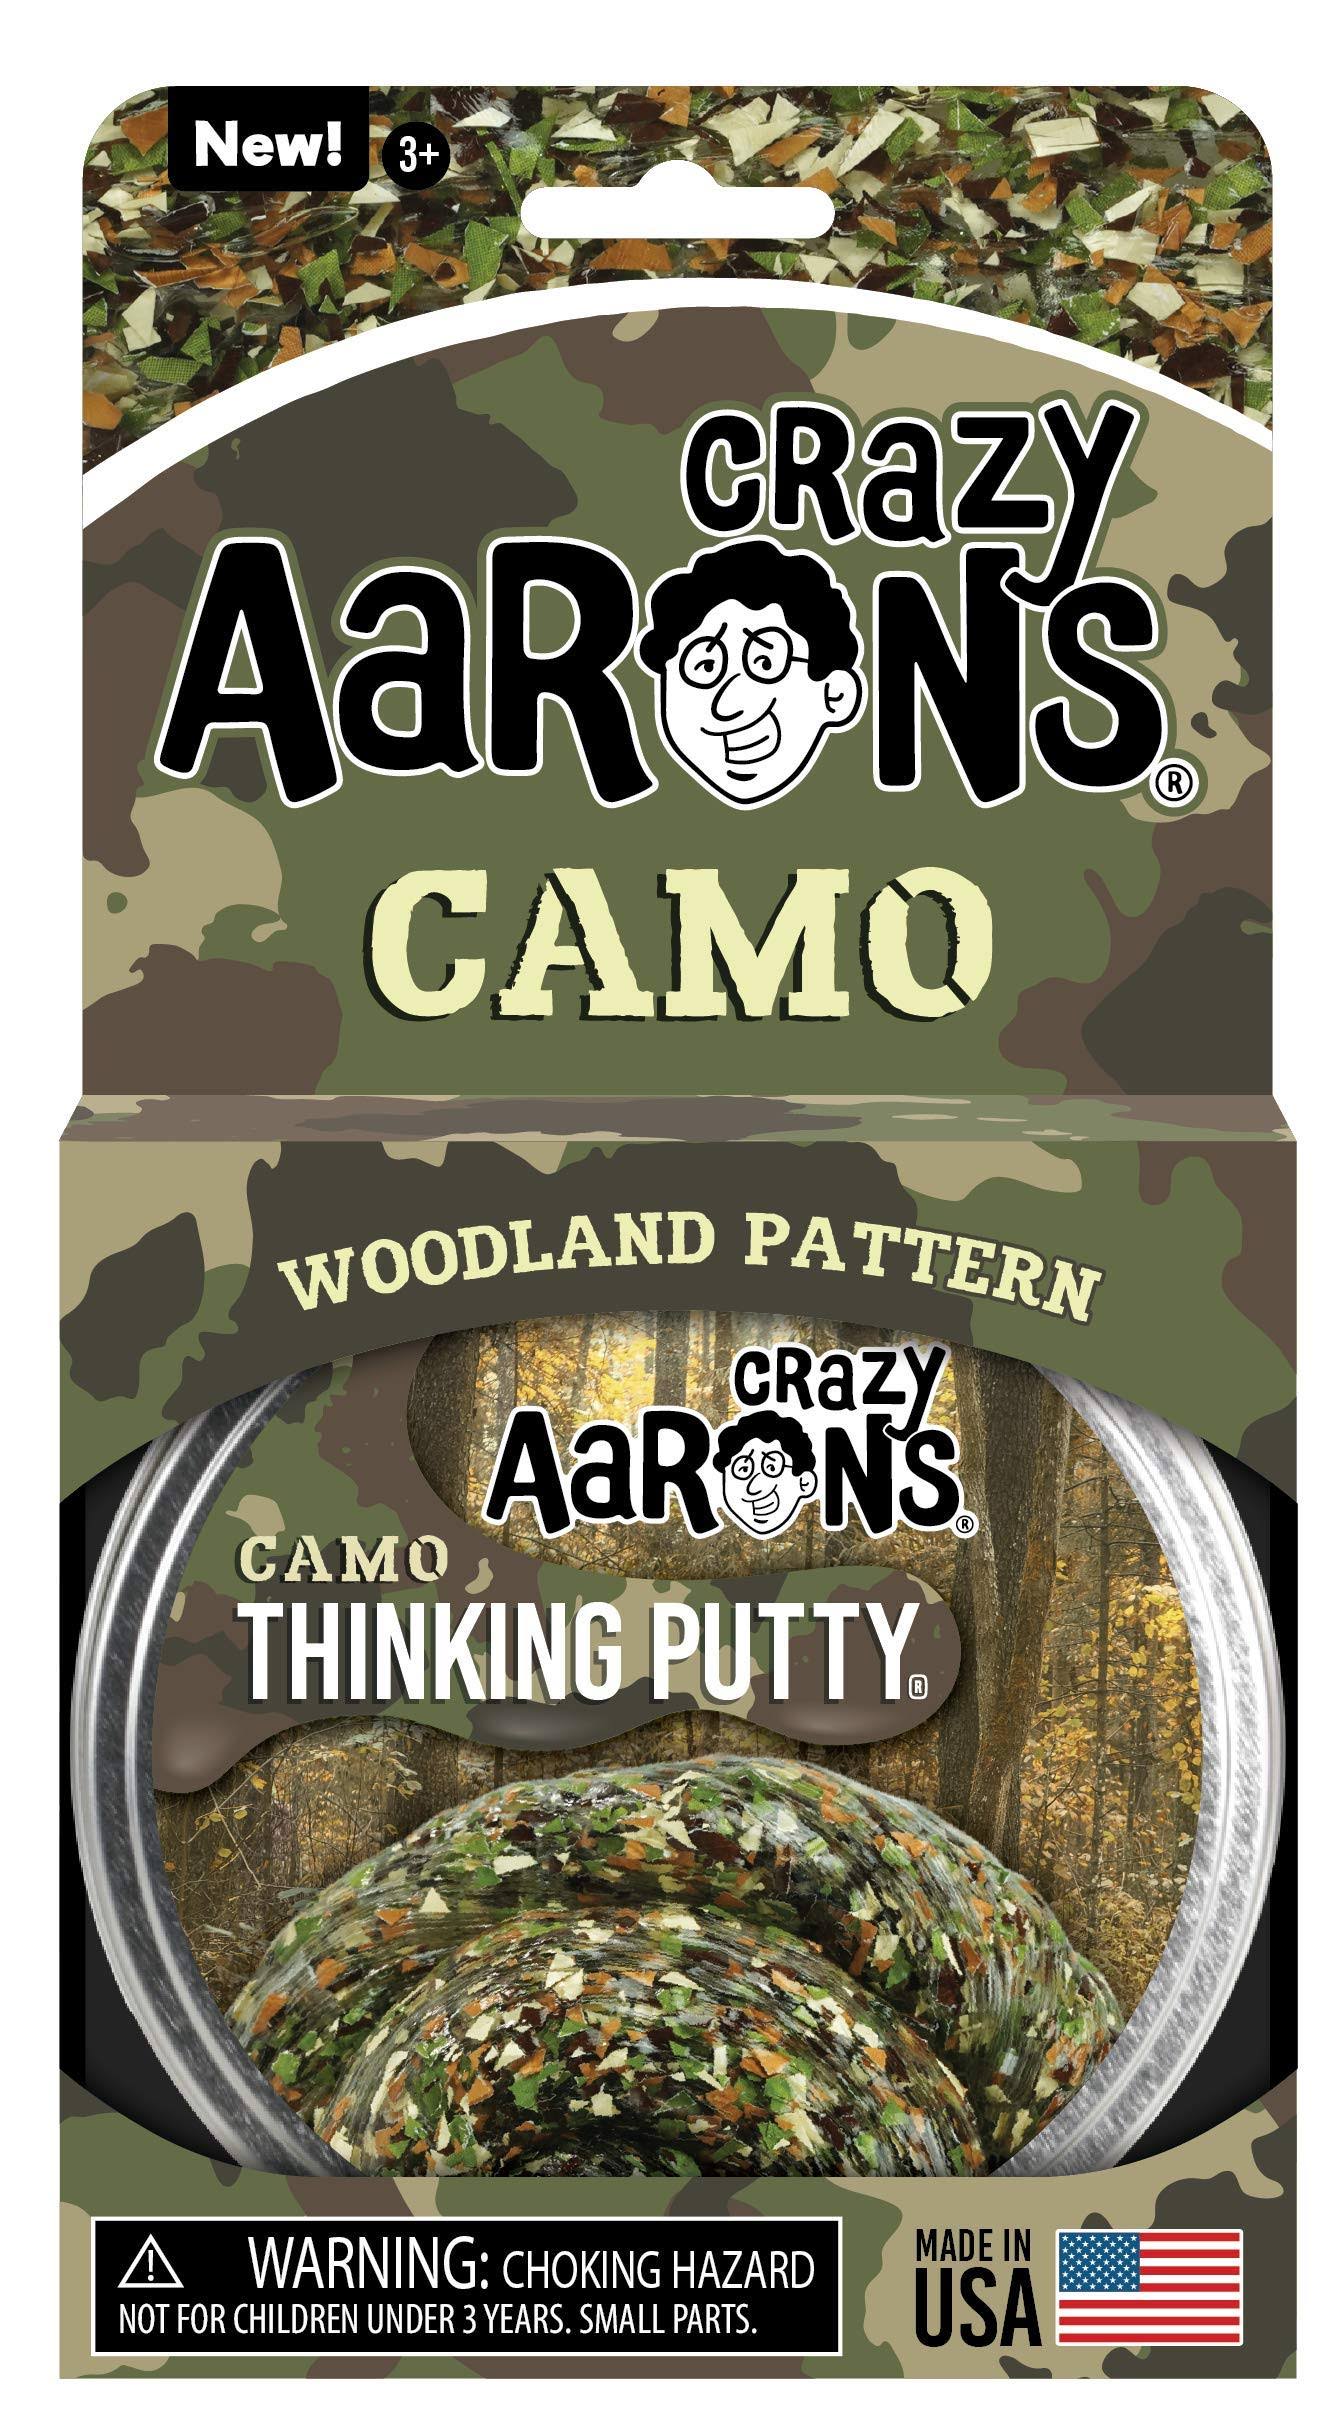 Crazy Aaron's Camo Thinking Putty